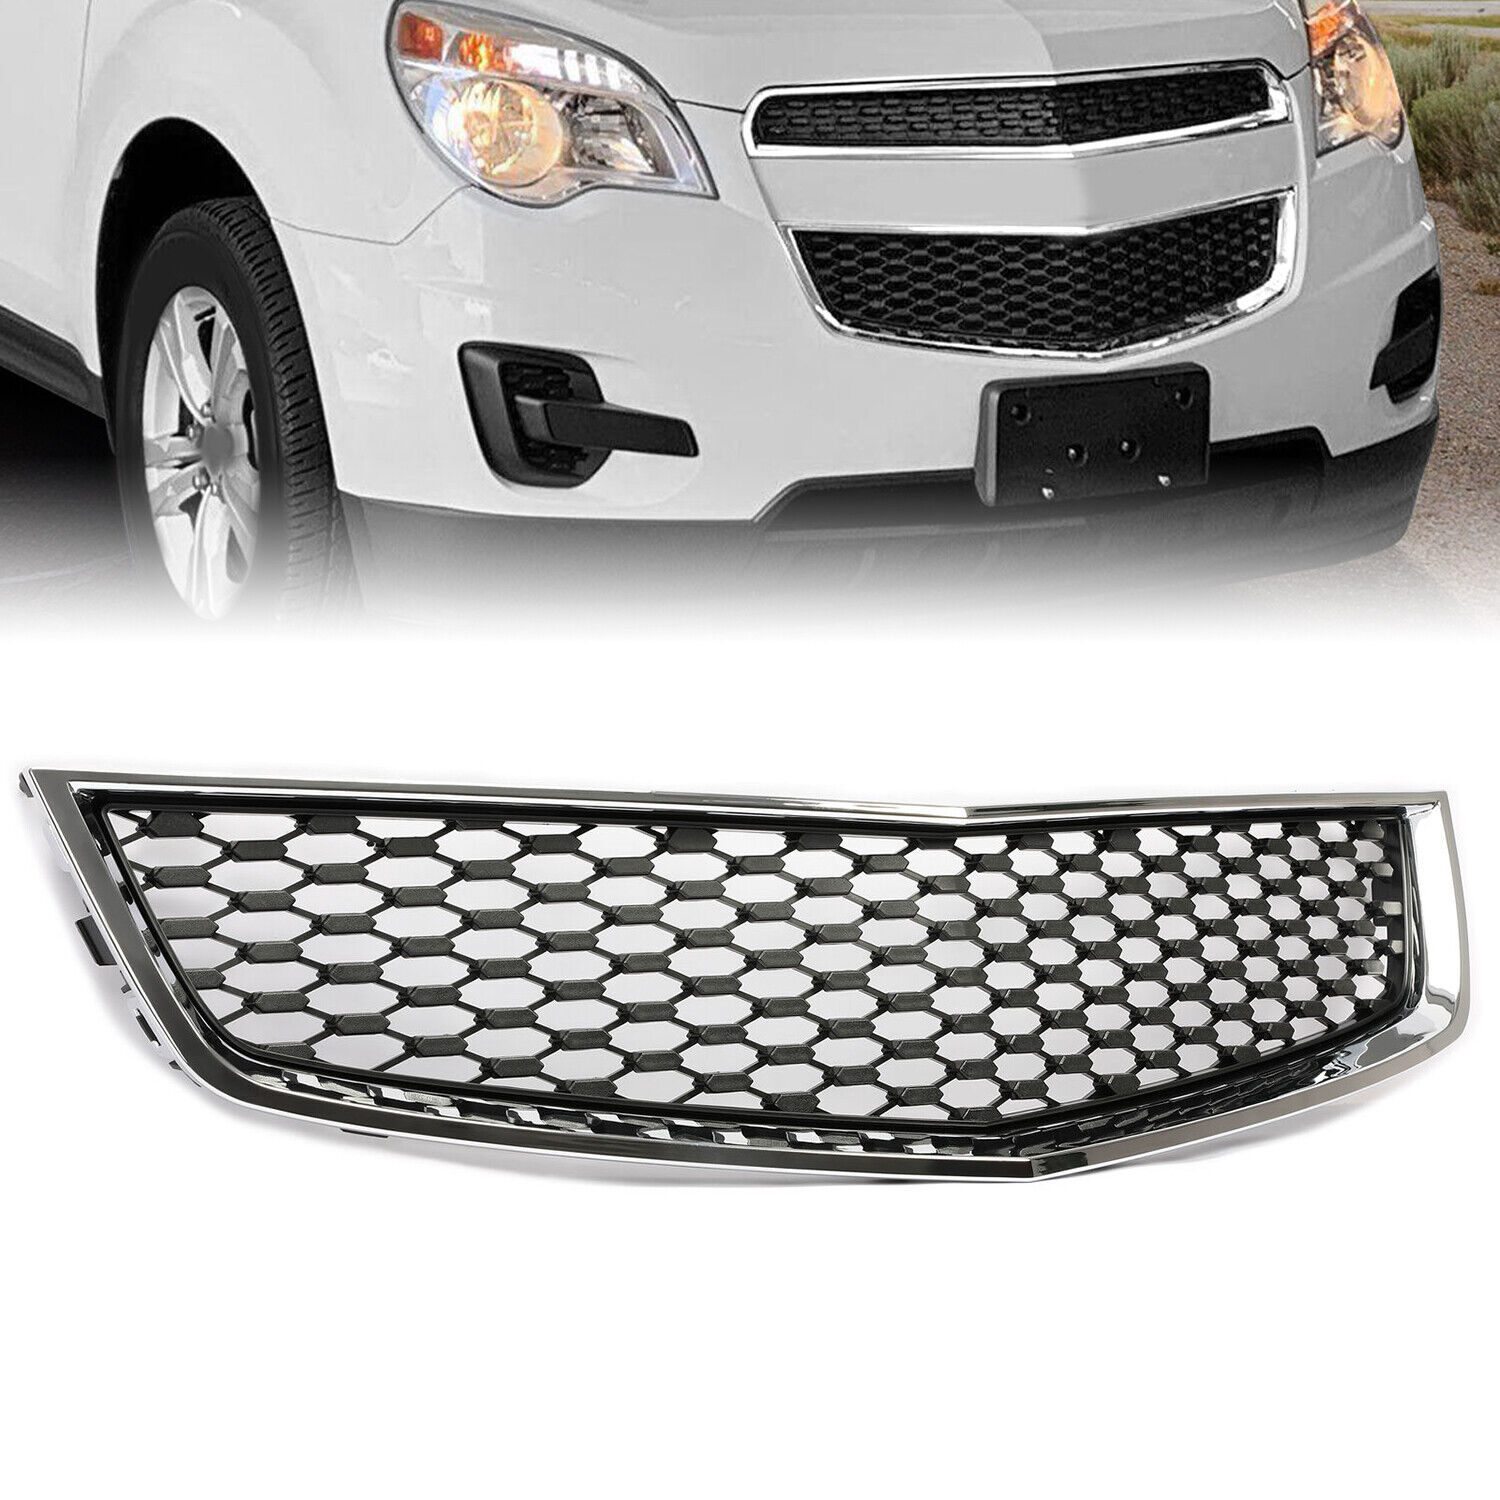 For 2010-2015 Chevrolet Equinox Front Chrome Shell W/ Black Insert Lower Grille